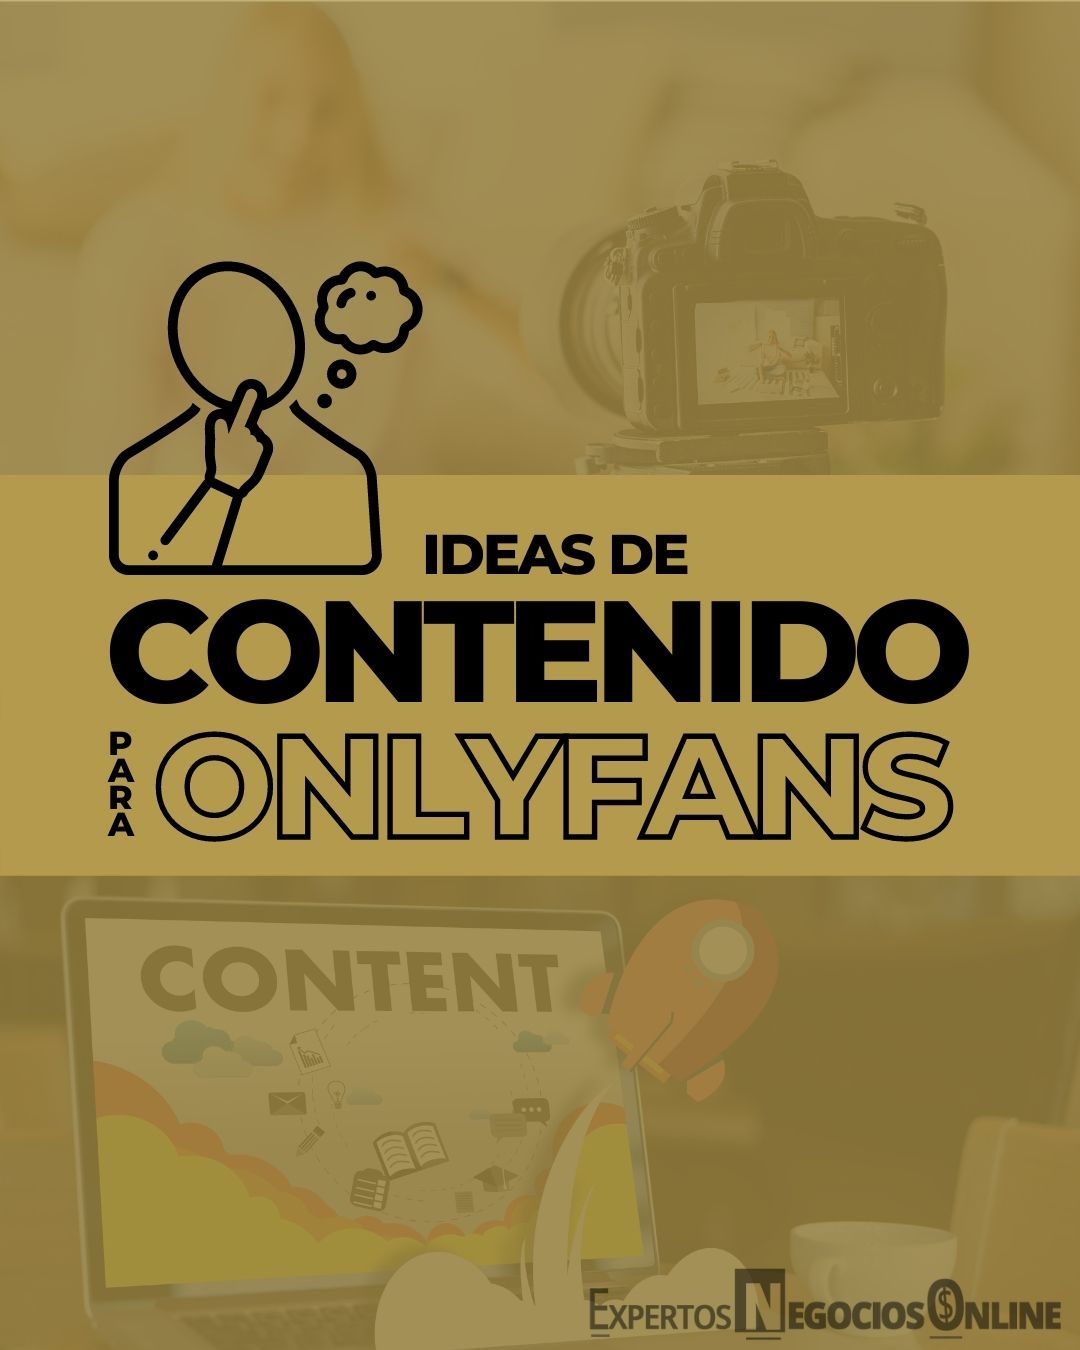 Onlyfans video ideas